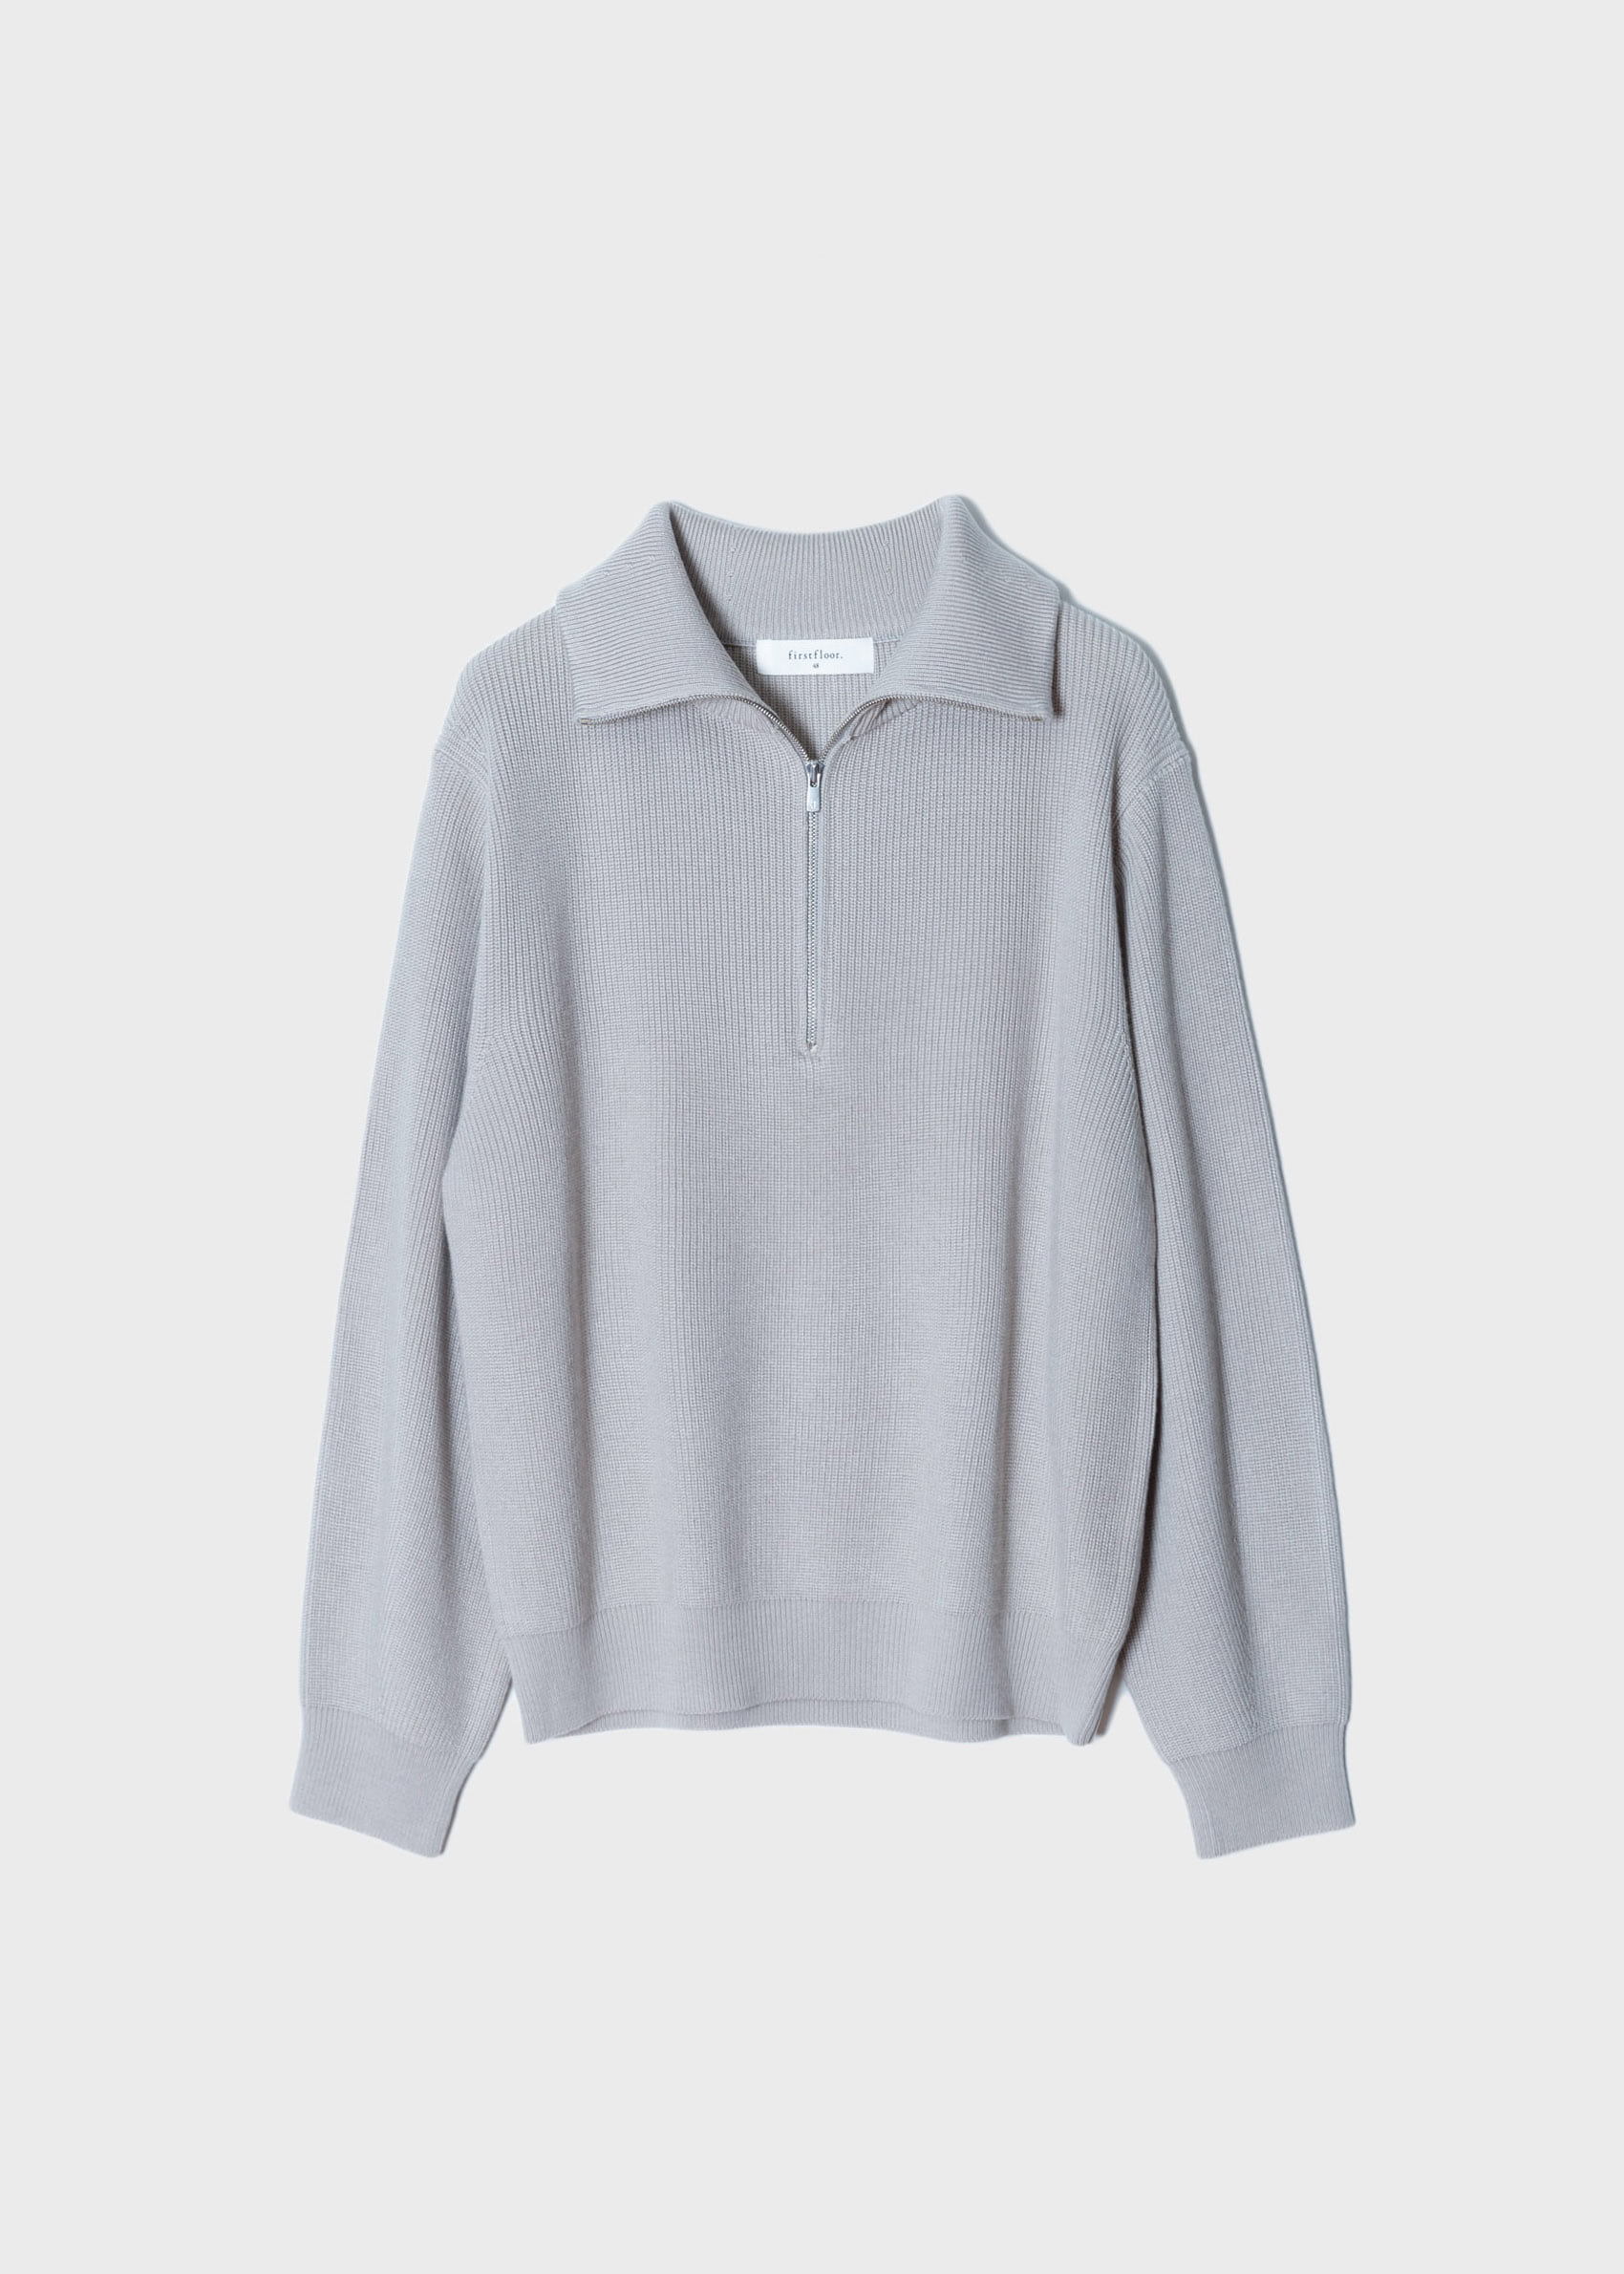 Flowing half-zip pullover (warm gray)